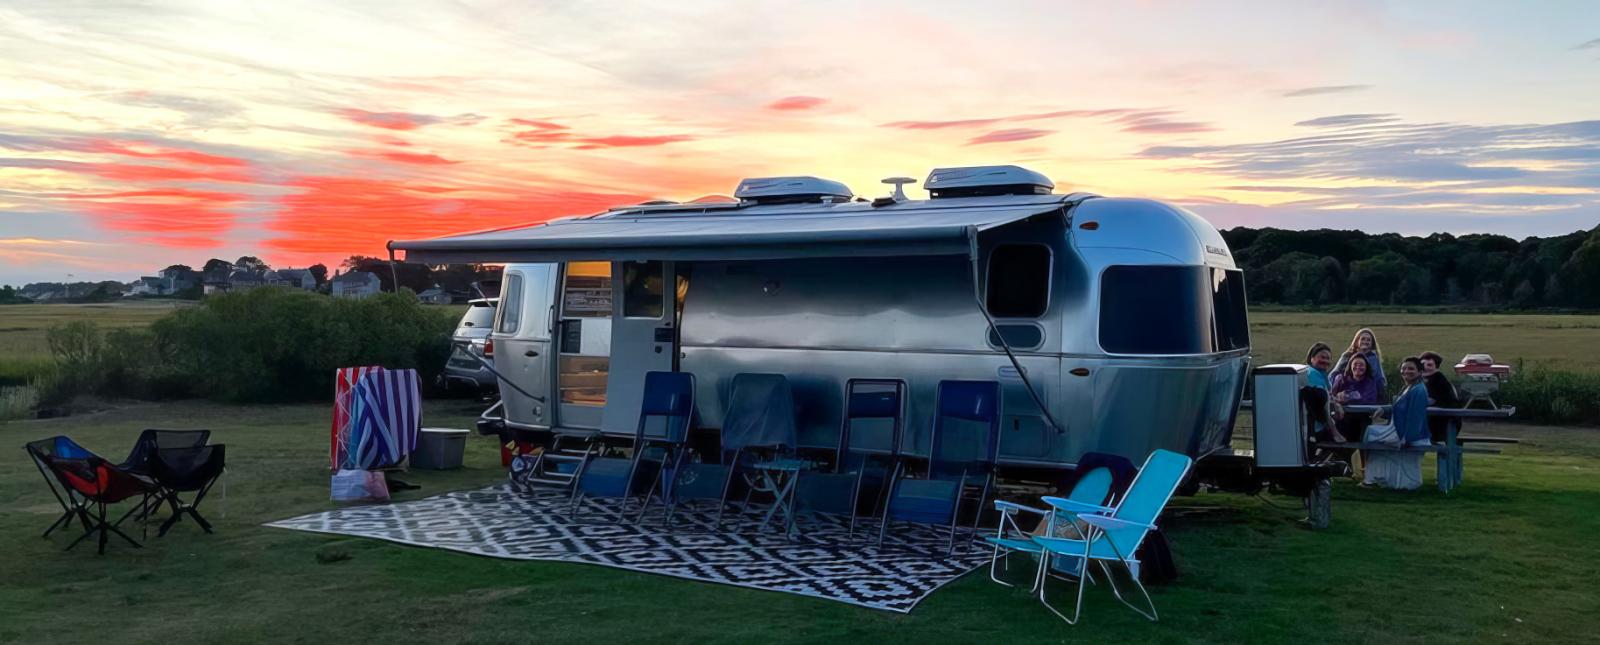 Campamento familiar en el Parque Estatal Hammonassett (Instagram@adventuresofroytheairstream)